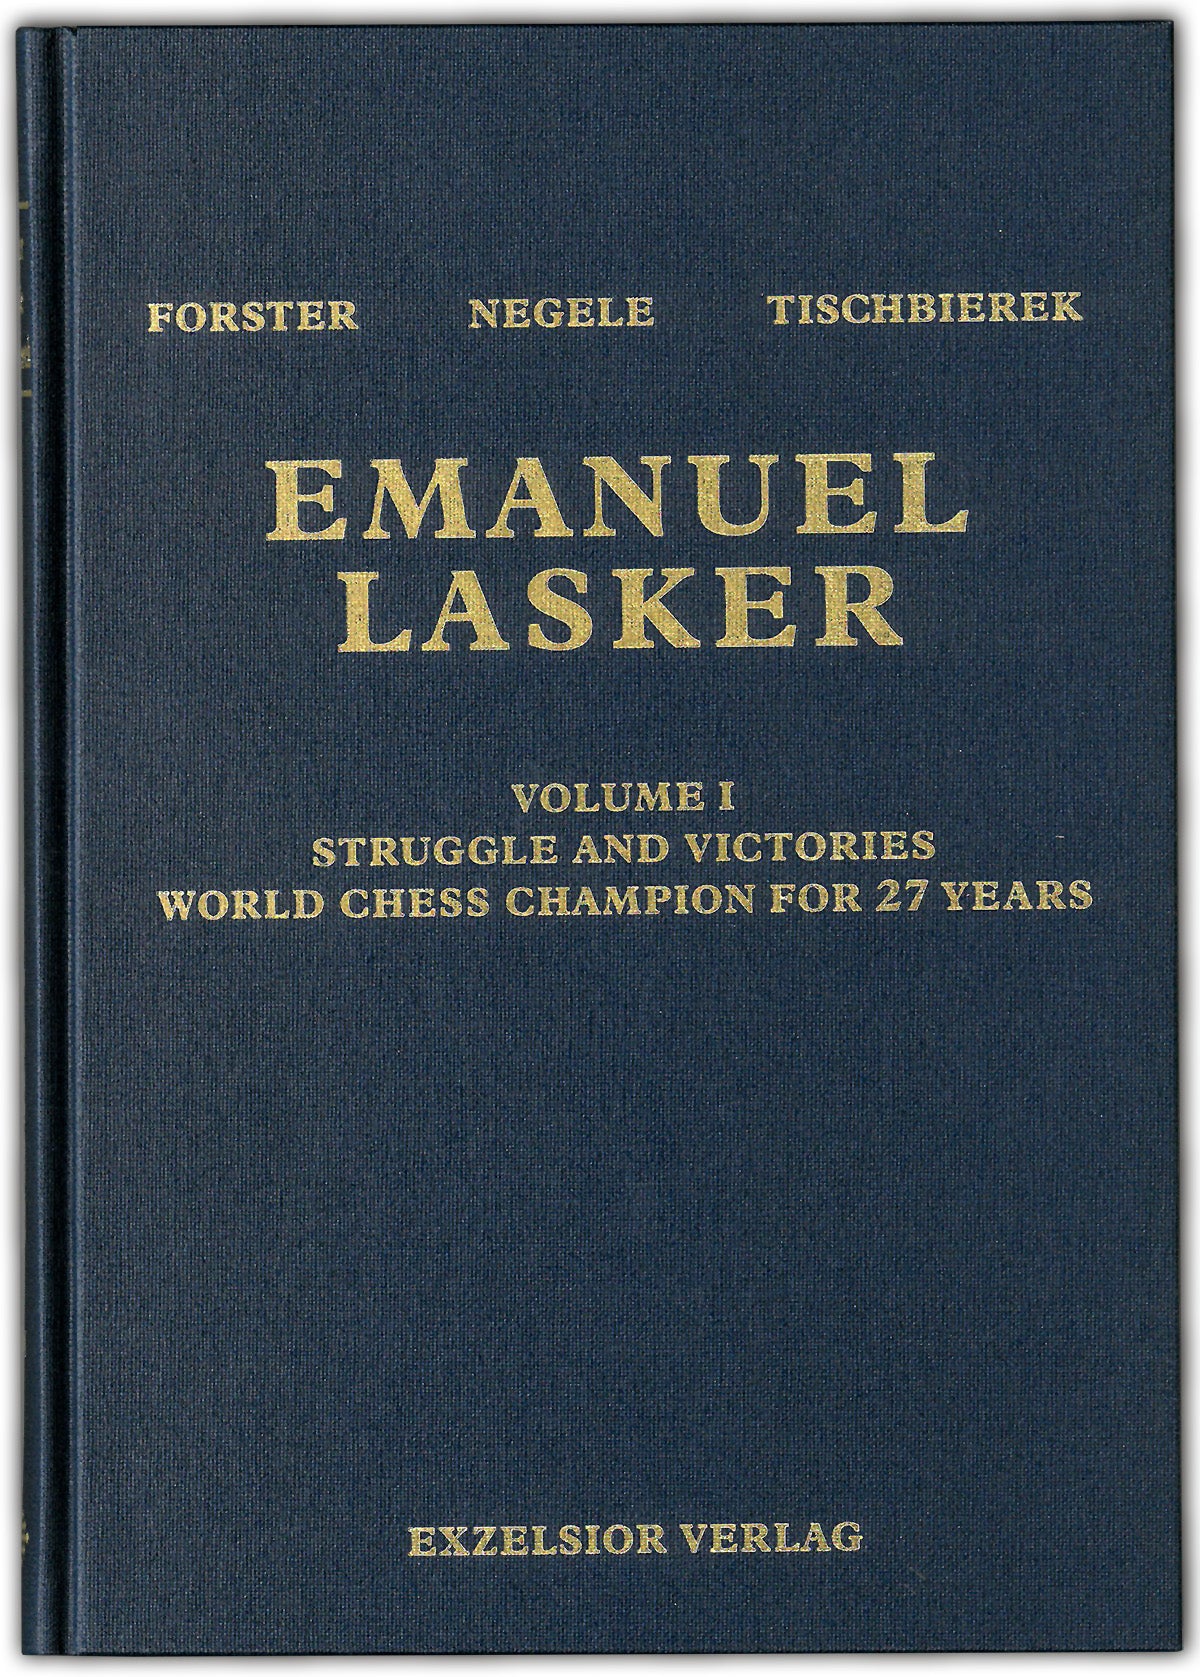 Tischbierek/Forster/Negele: Emanuel Lasker - Volume 1